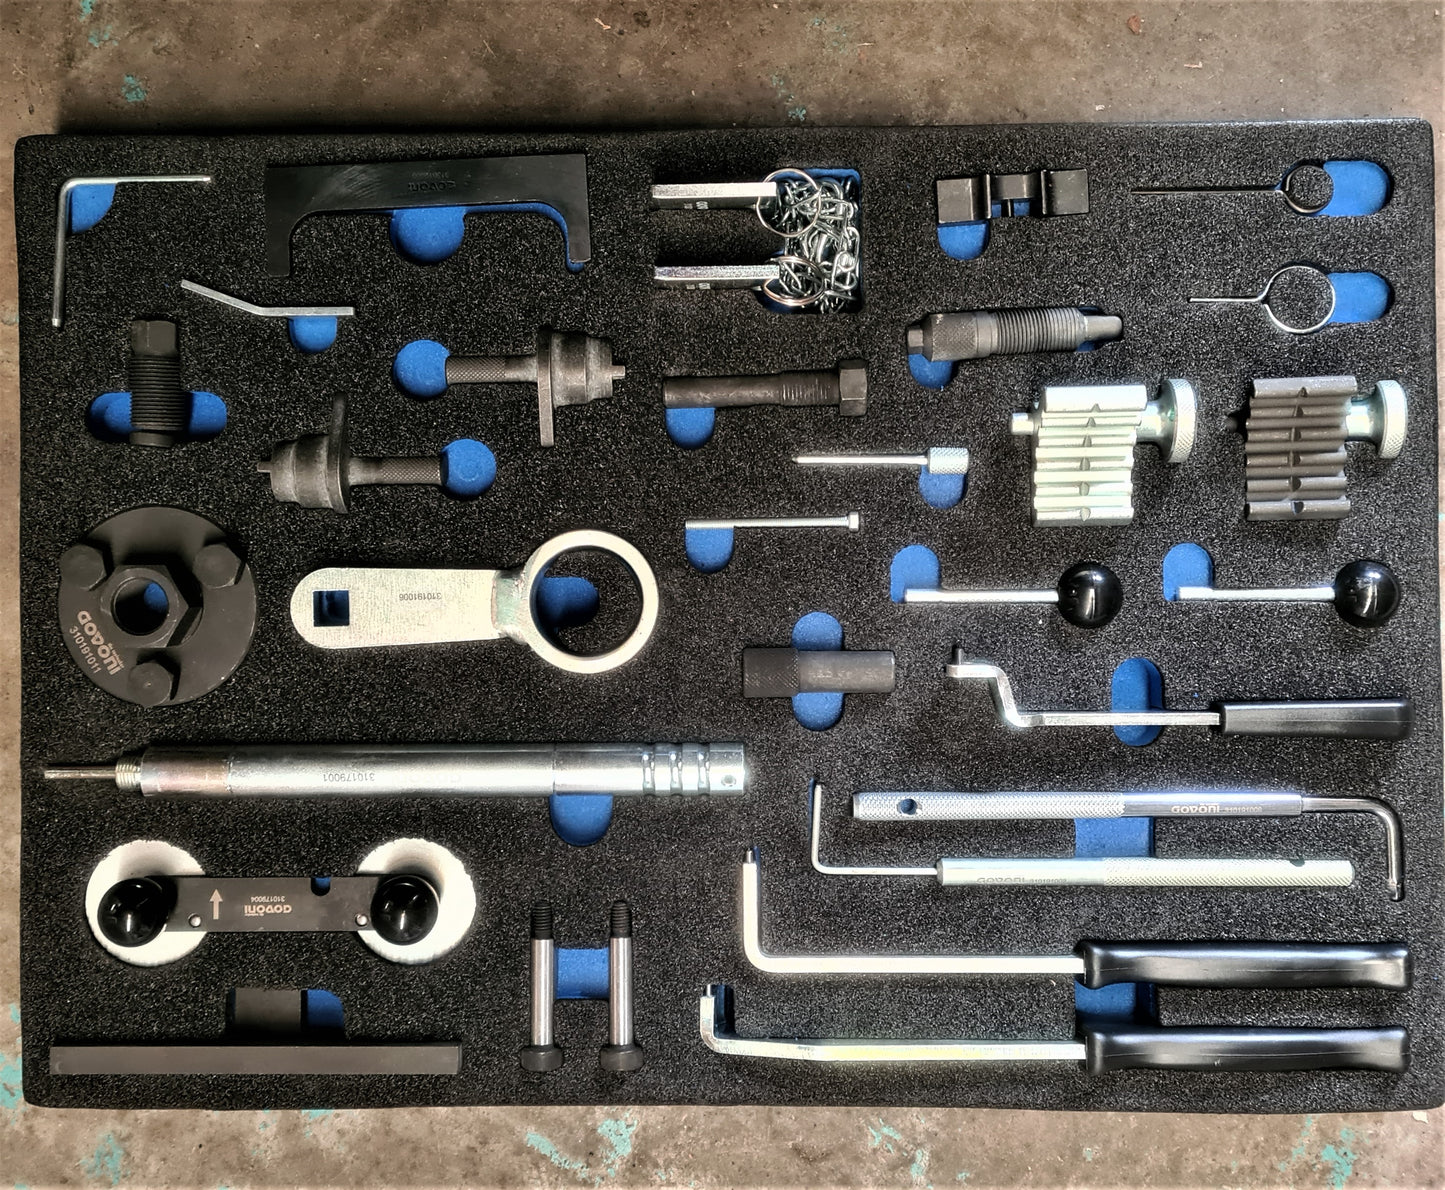 Comprehensive Govoni drawer set of timing tools